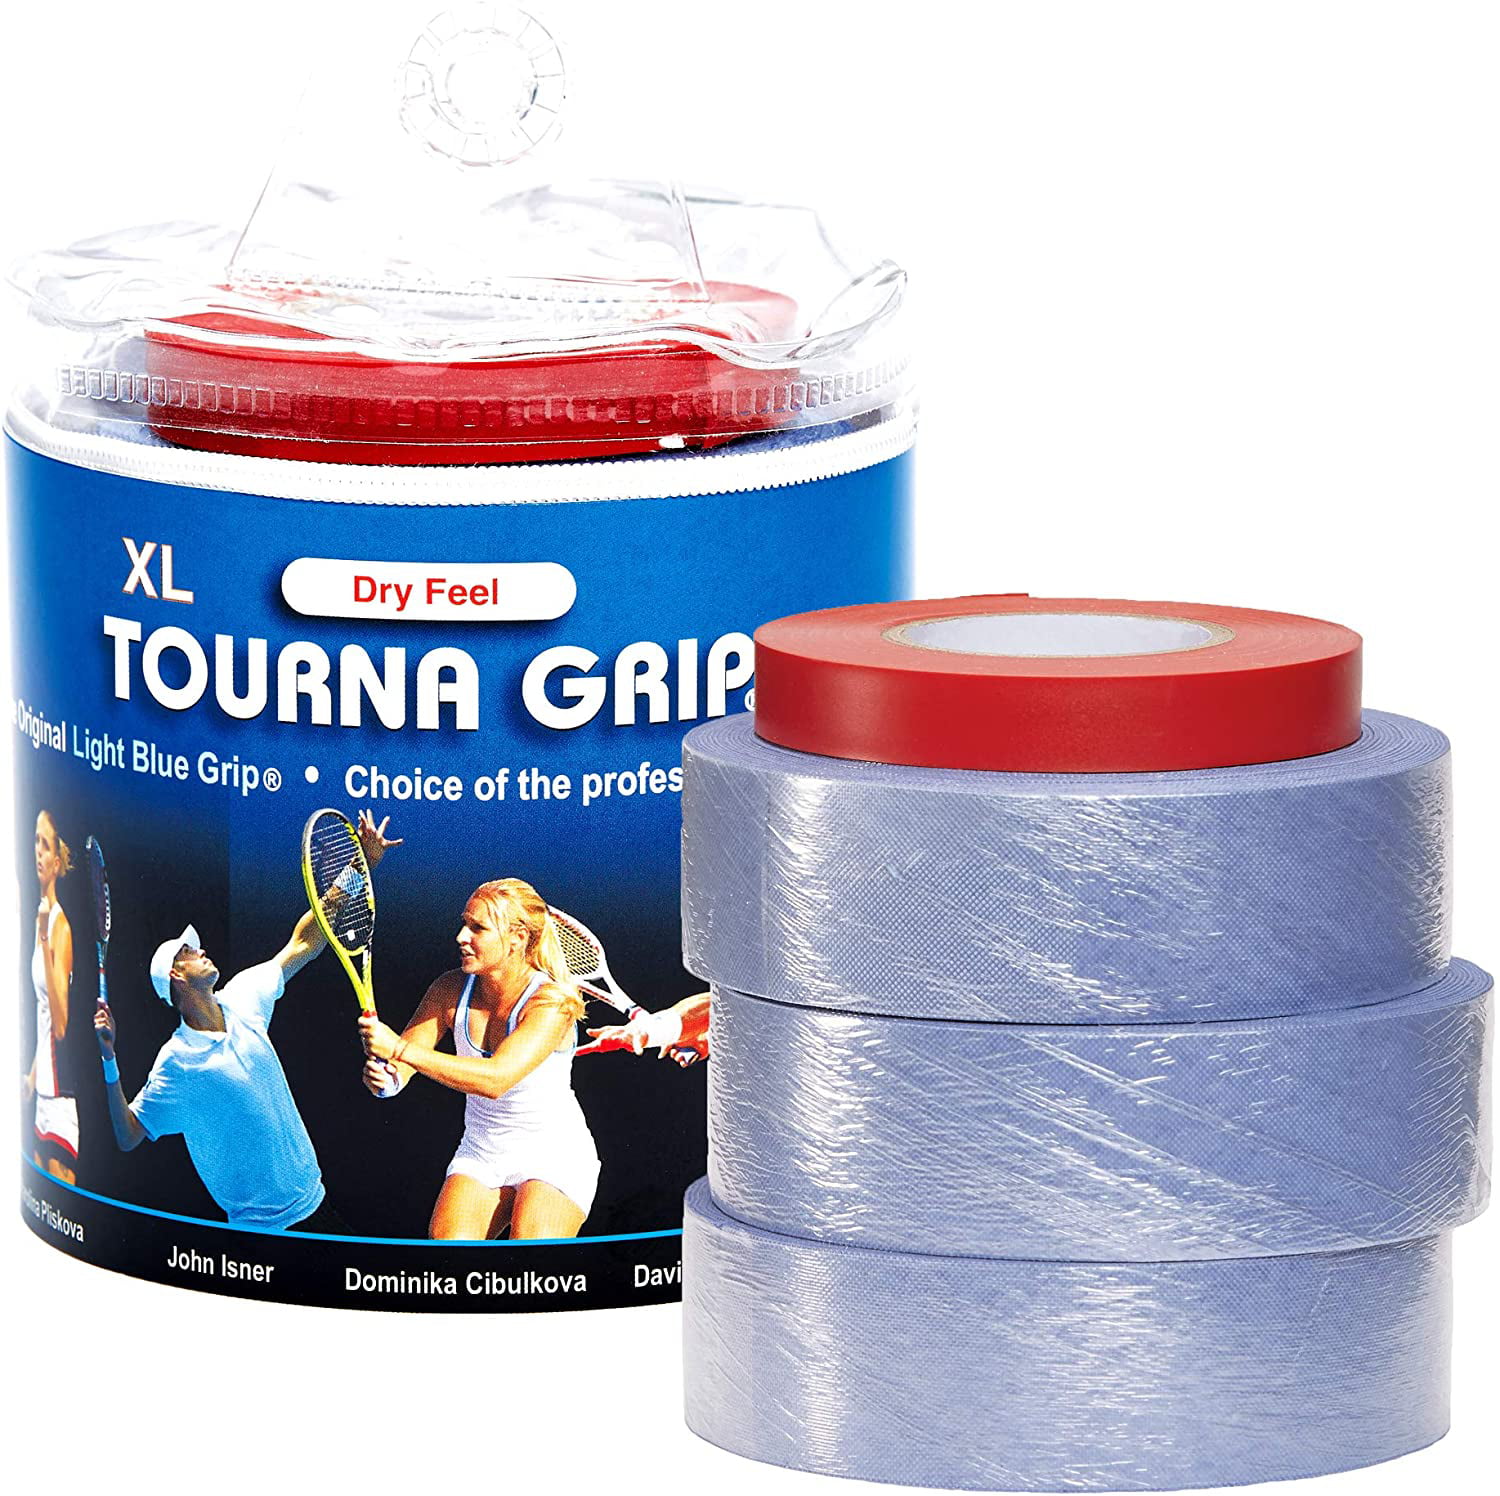 Dry feeling. Овергрип Tourna Grip. Овергрип unique Tourna Grip XL Blue 30 шт. Обмотка Tourna Grip. Tourna Grip Tennis.